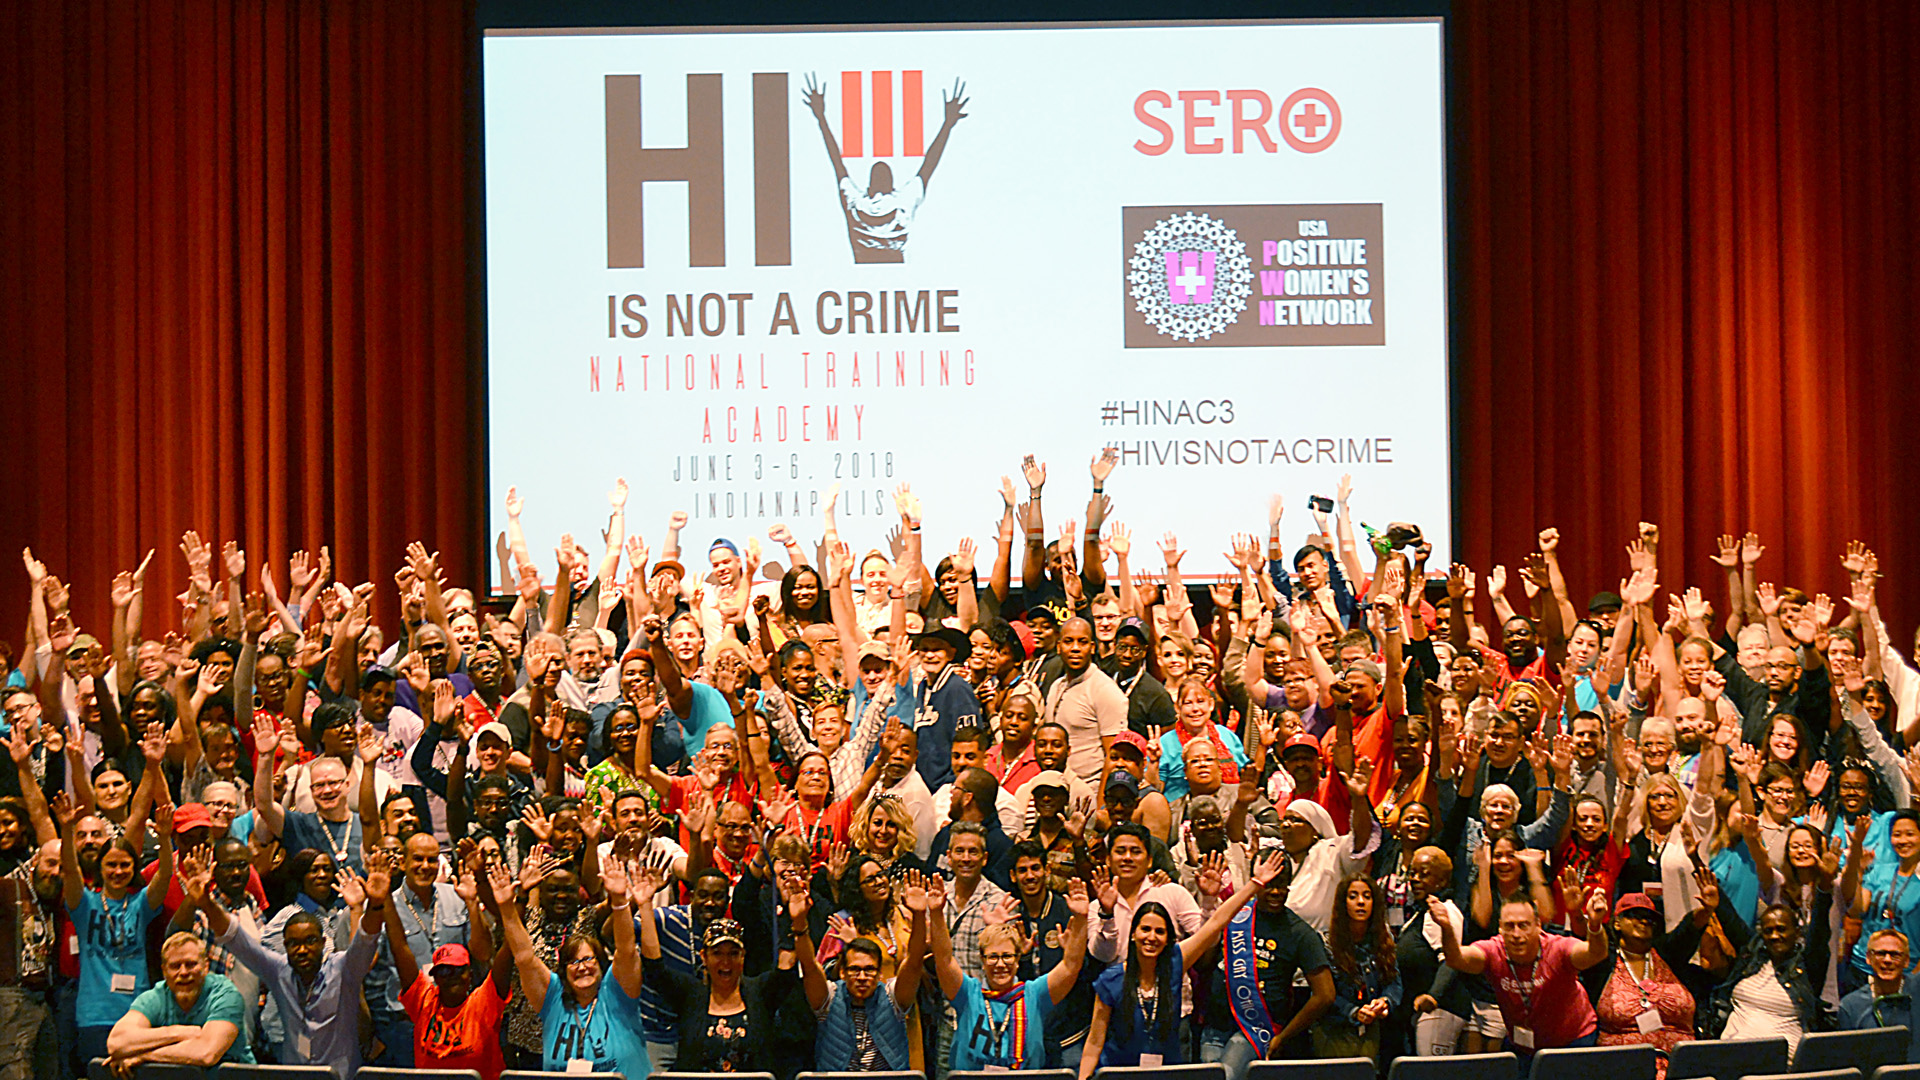 SERO HIV/AIDS activists together 